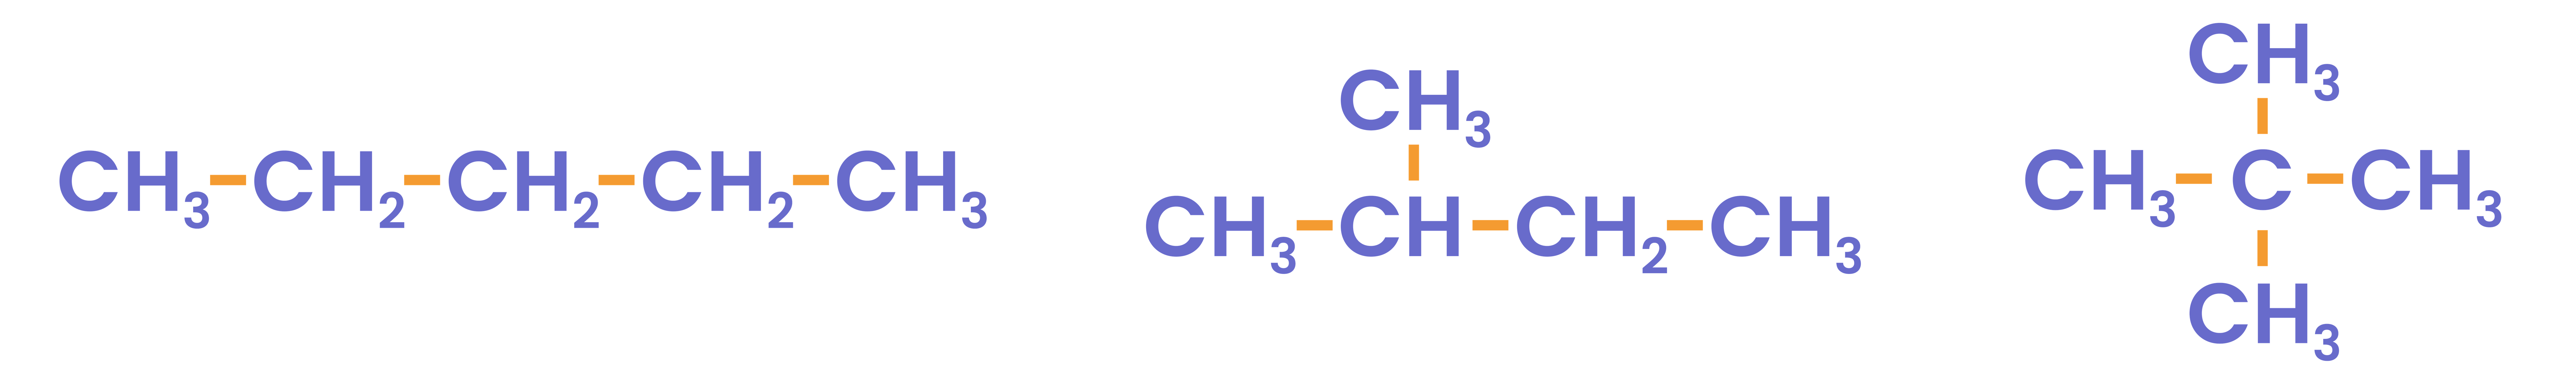 edexcel_igcse_chemistry_topic 21_introduction_001_isomers of alkane C5H12